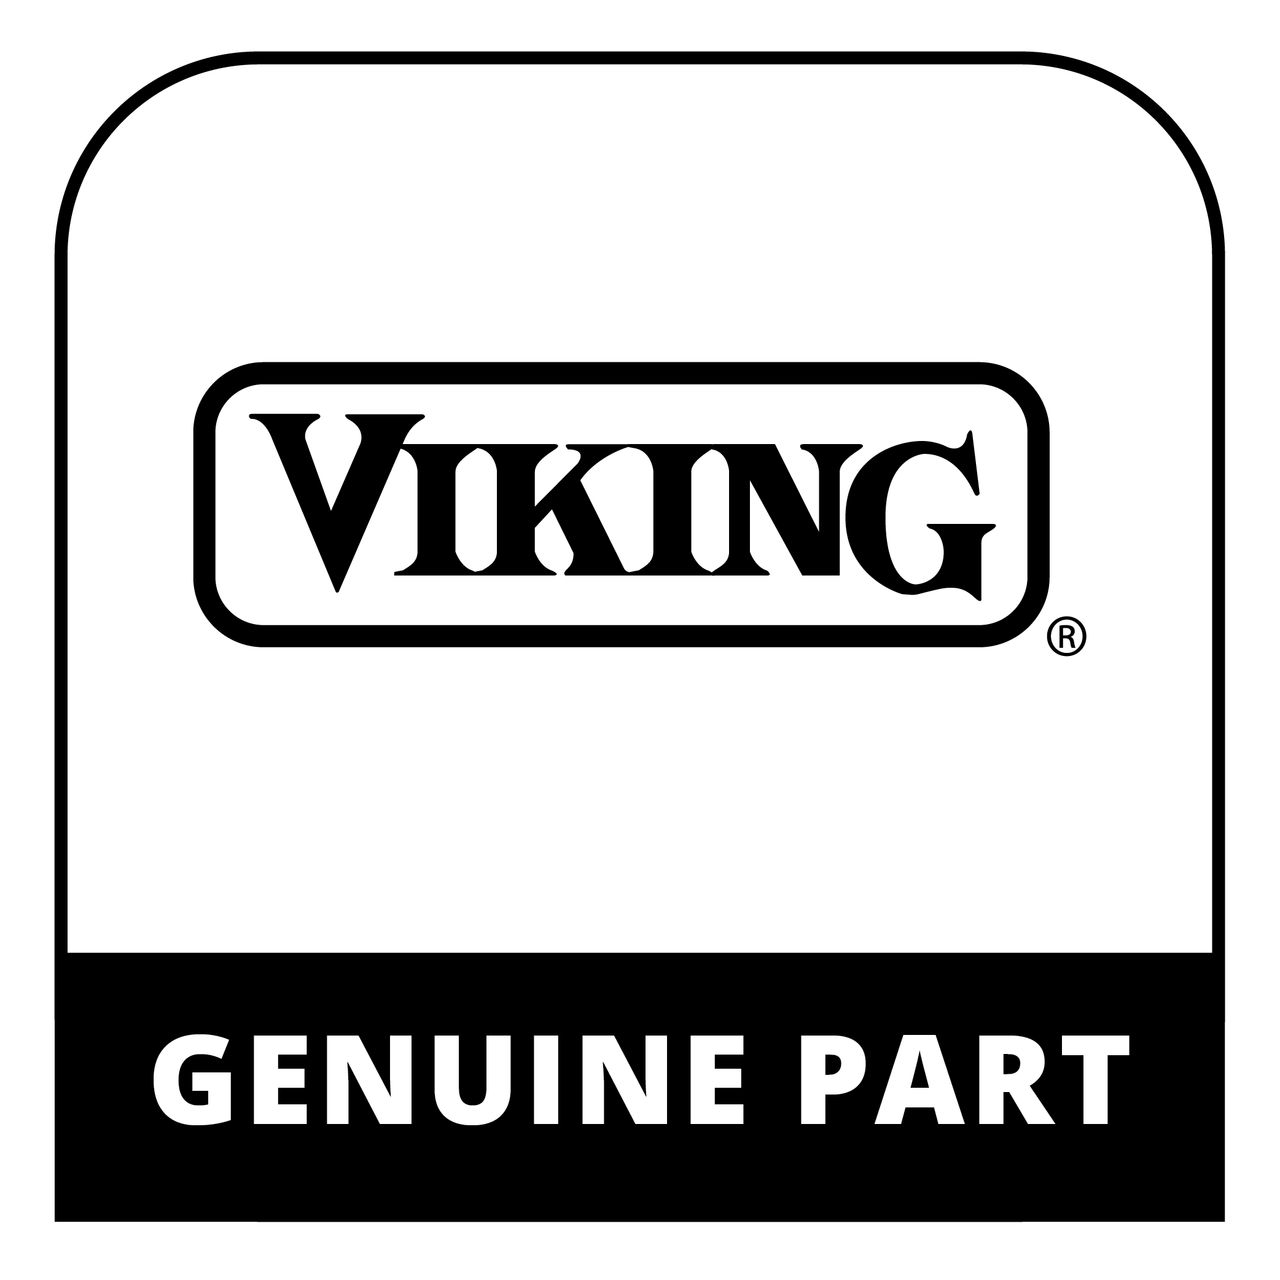 Viking 073080-000 - Support Right Side Oven Kit - Genuine Viking Part